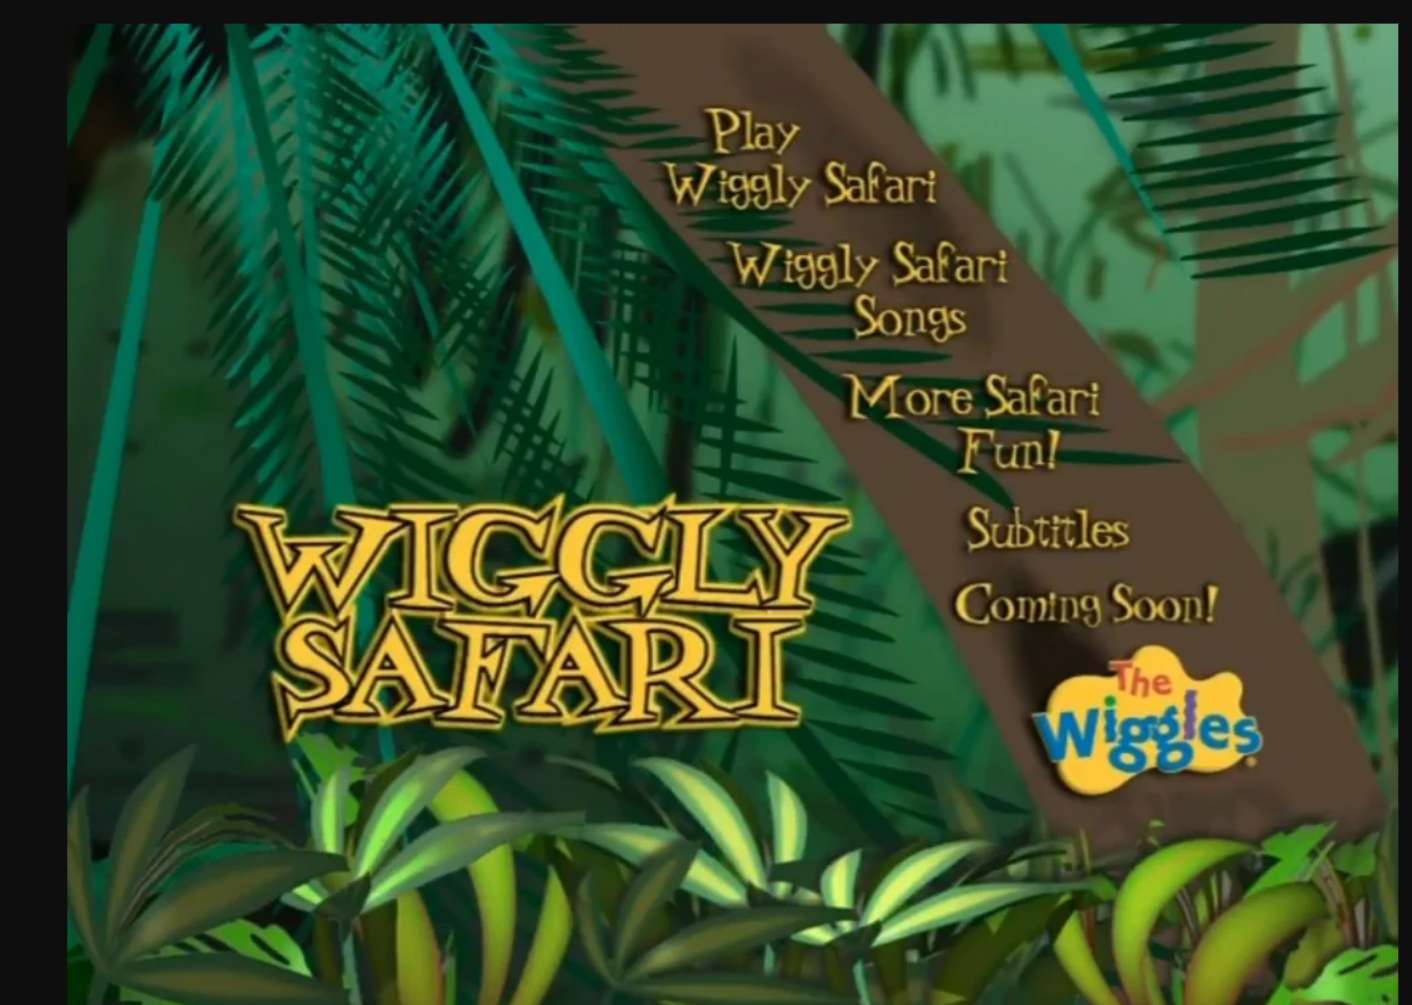 Wiggly Safari DVD Menu 2002 online puzzle